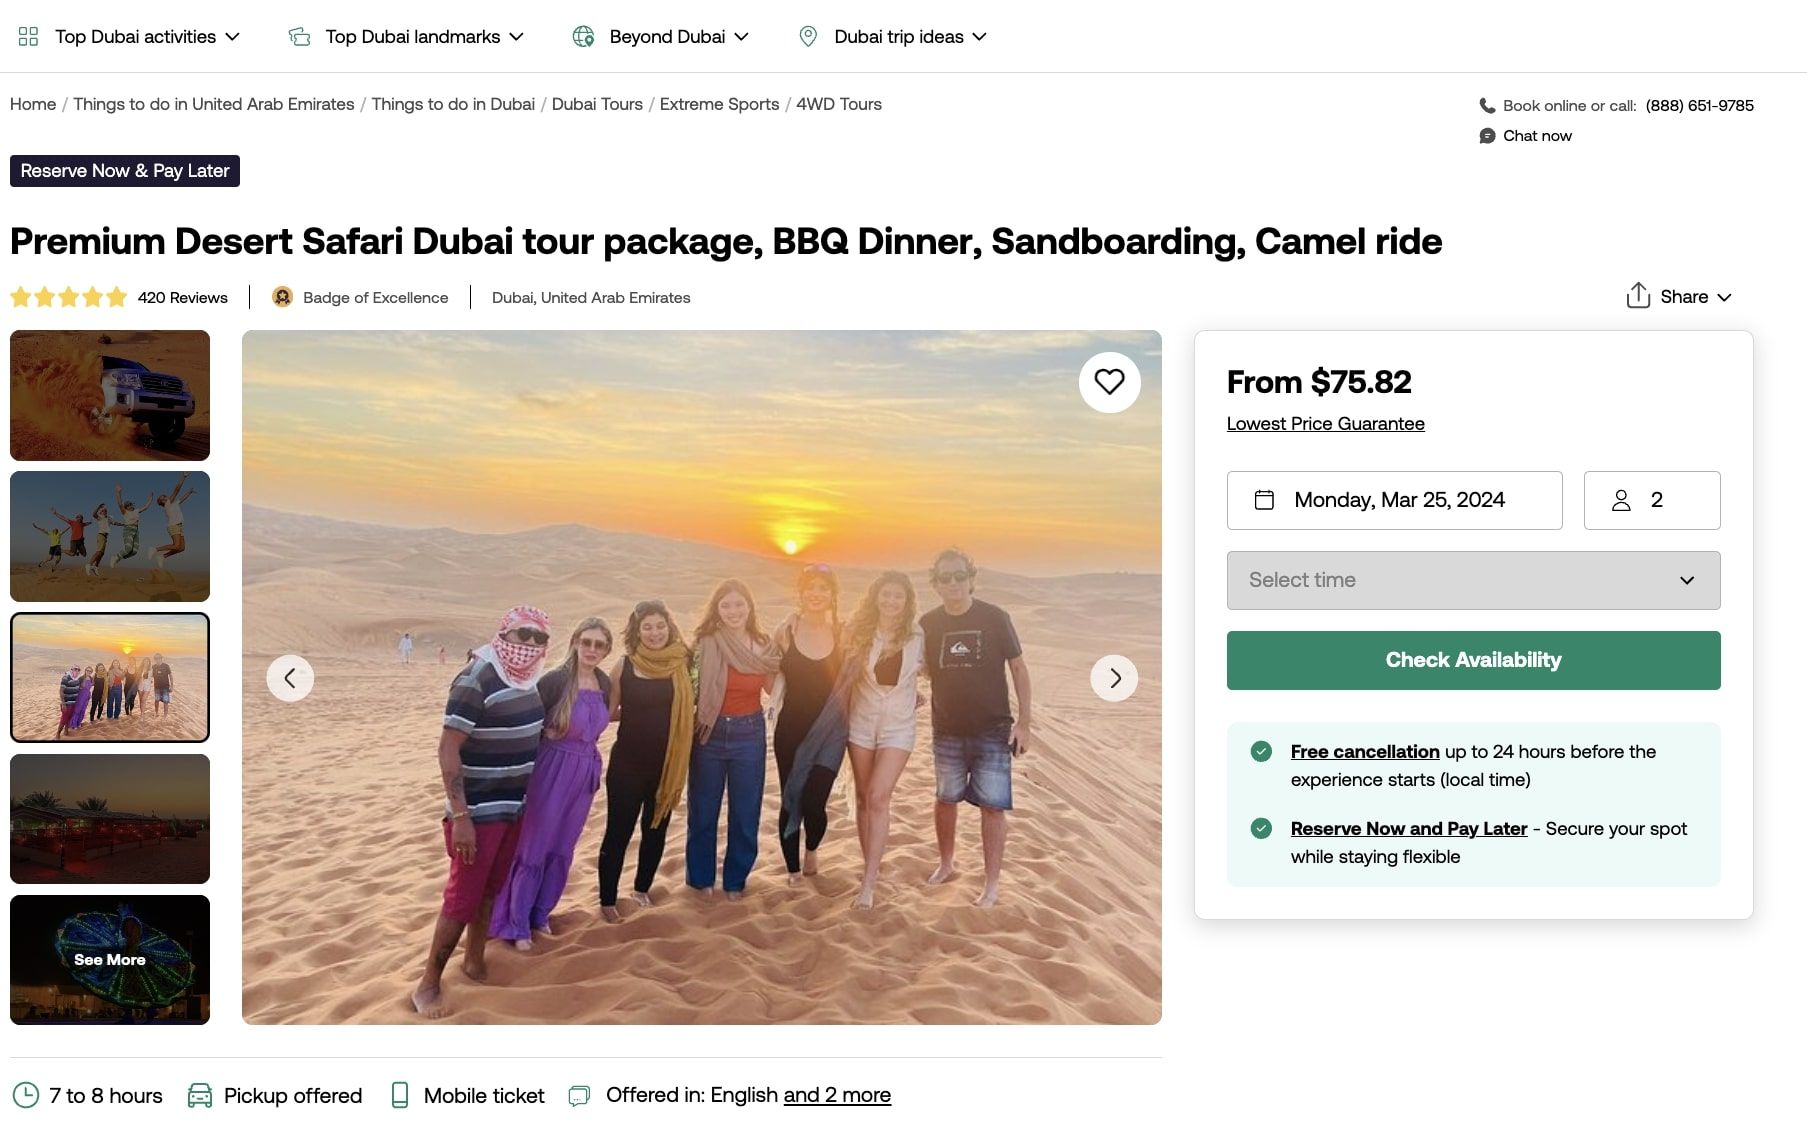 Viator tour example: Premium Desert Safari Dubai tour package, BBQ Dinner, Sandboarding, Camel ride